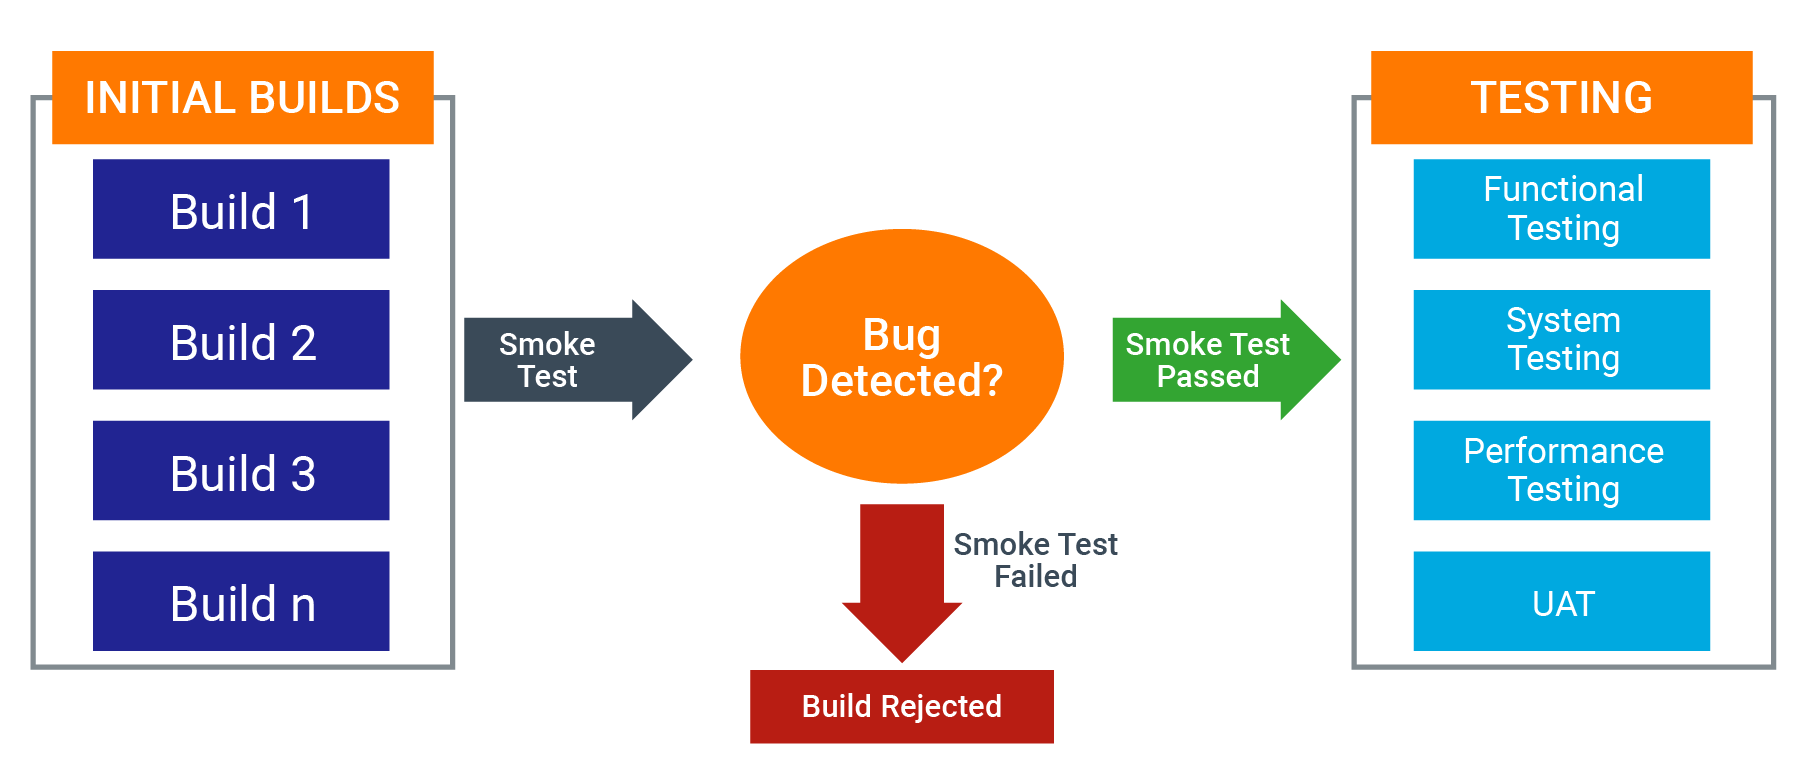 How smoke testing works in software development